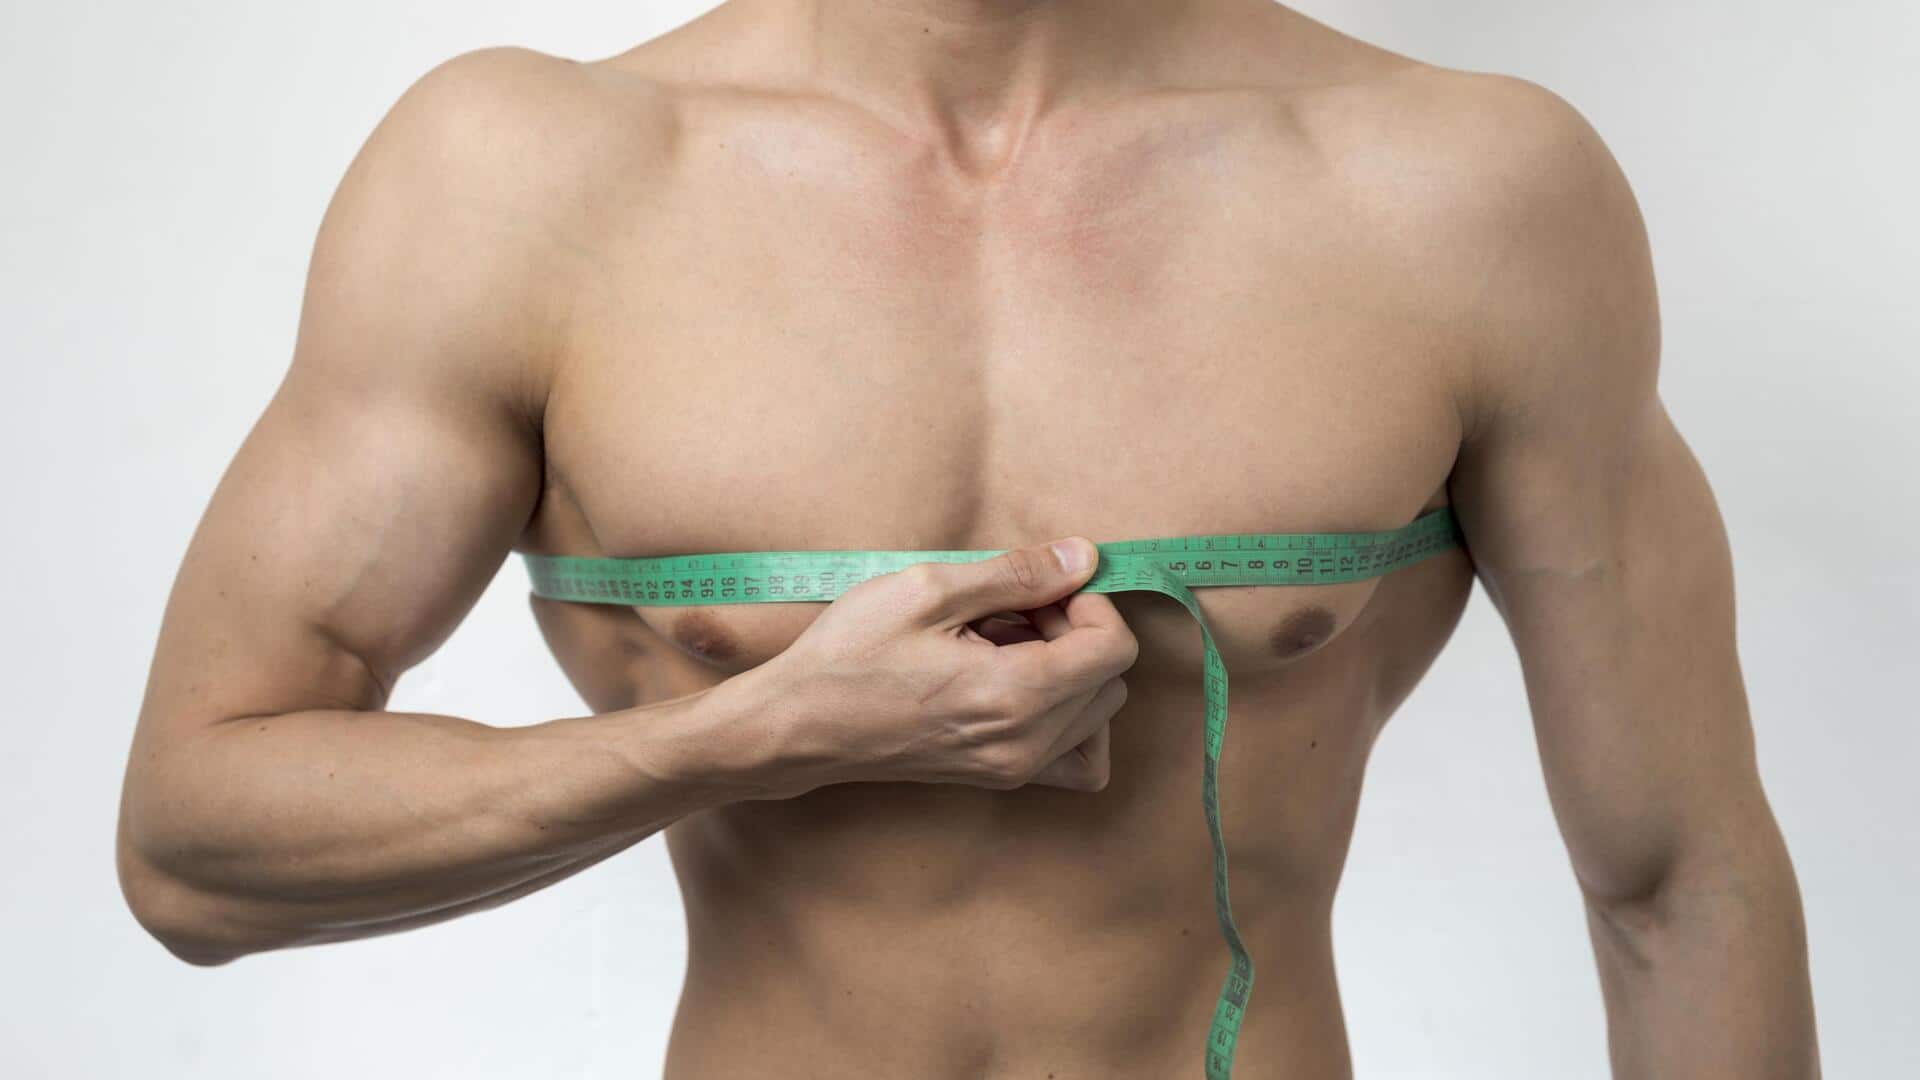 #HealthBytes: 5 exercises that help eliminate chest fat